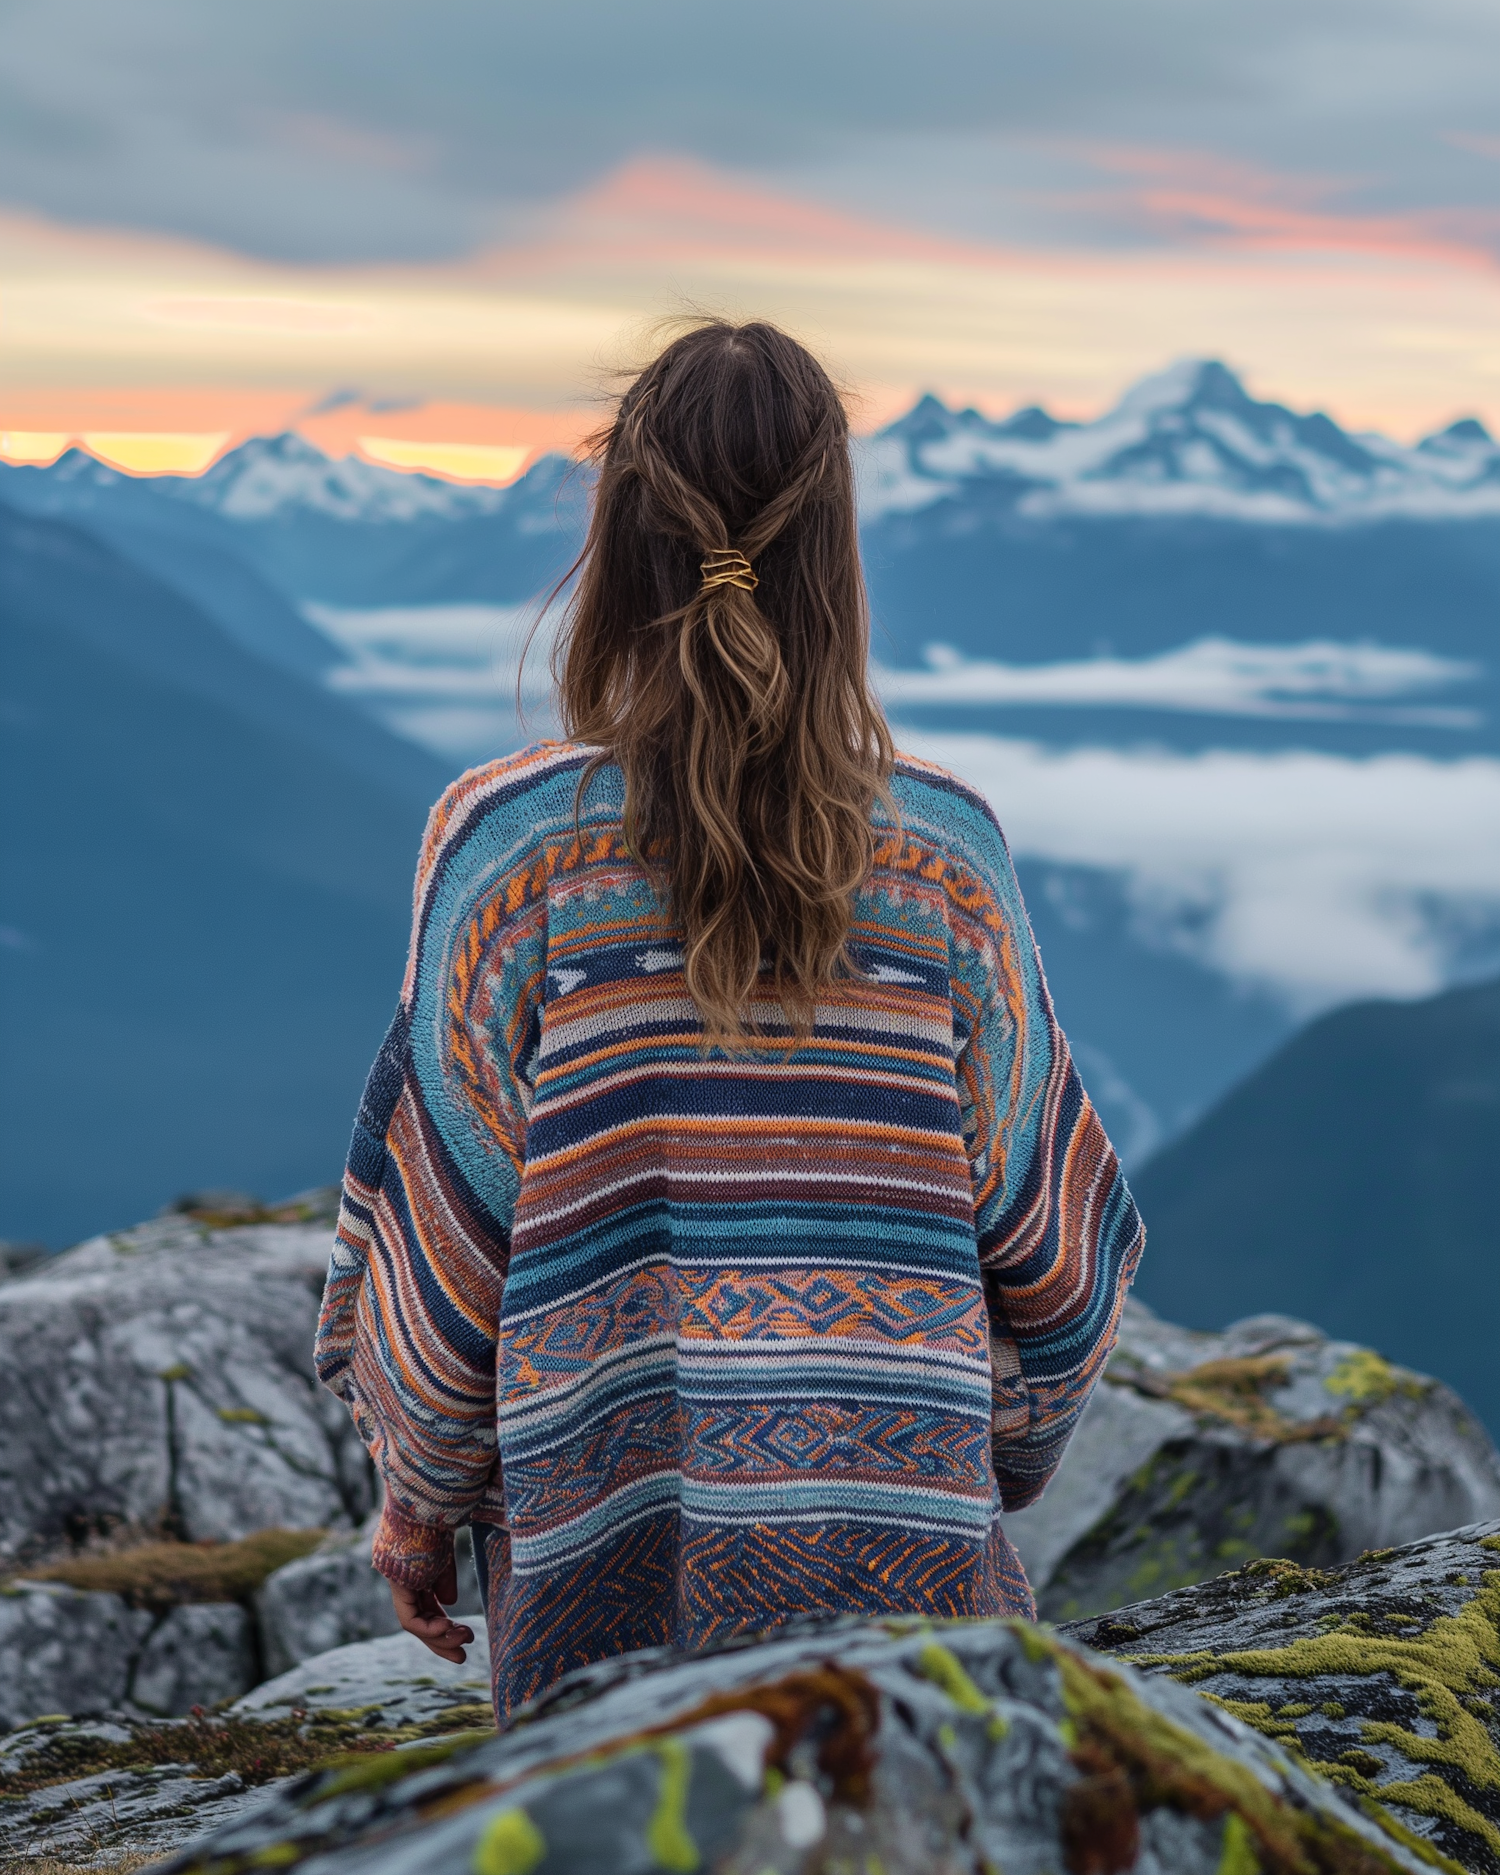 Contemplative Woman at Mountain Sunset